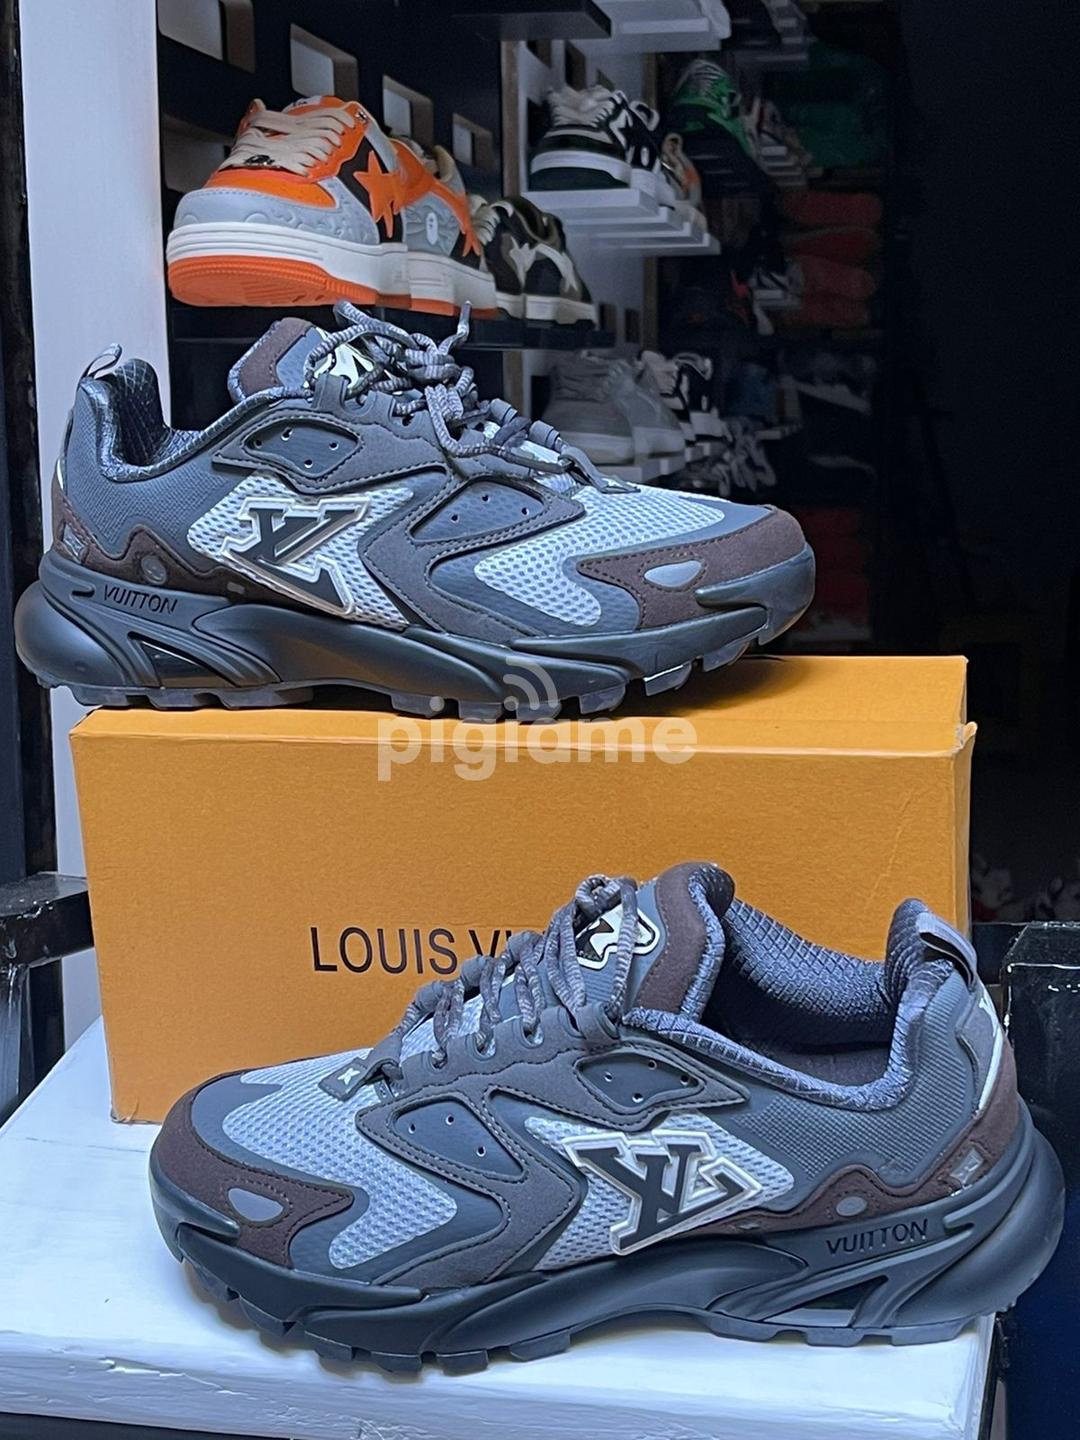 Sneaker Store Kenya - Louis Vuitton sneakers Size 36-40 Price 3500